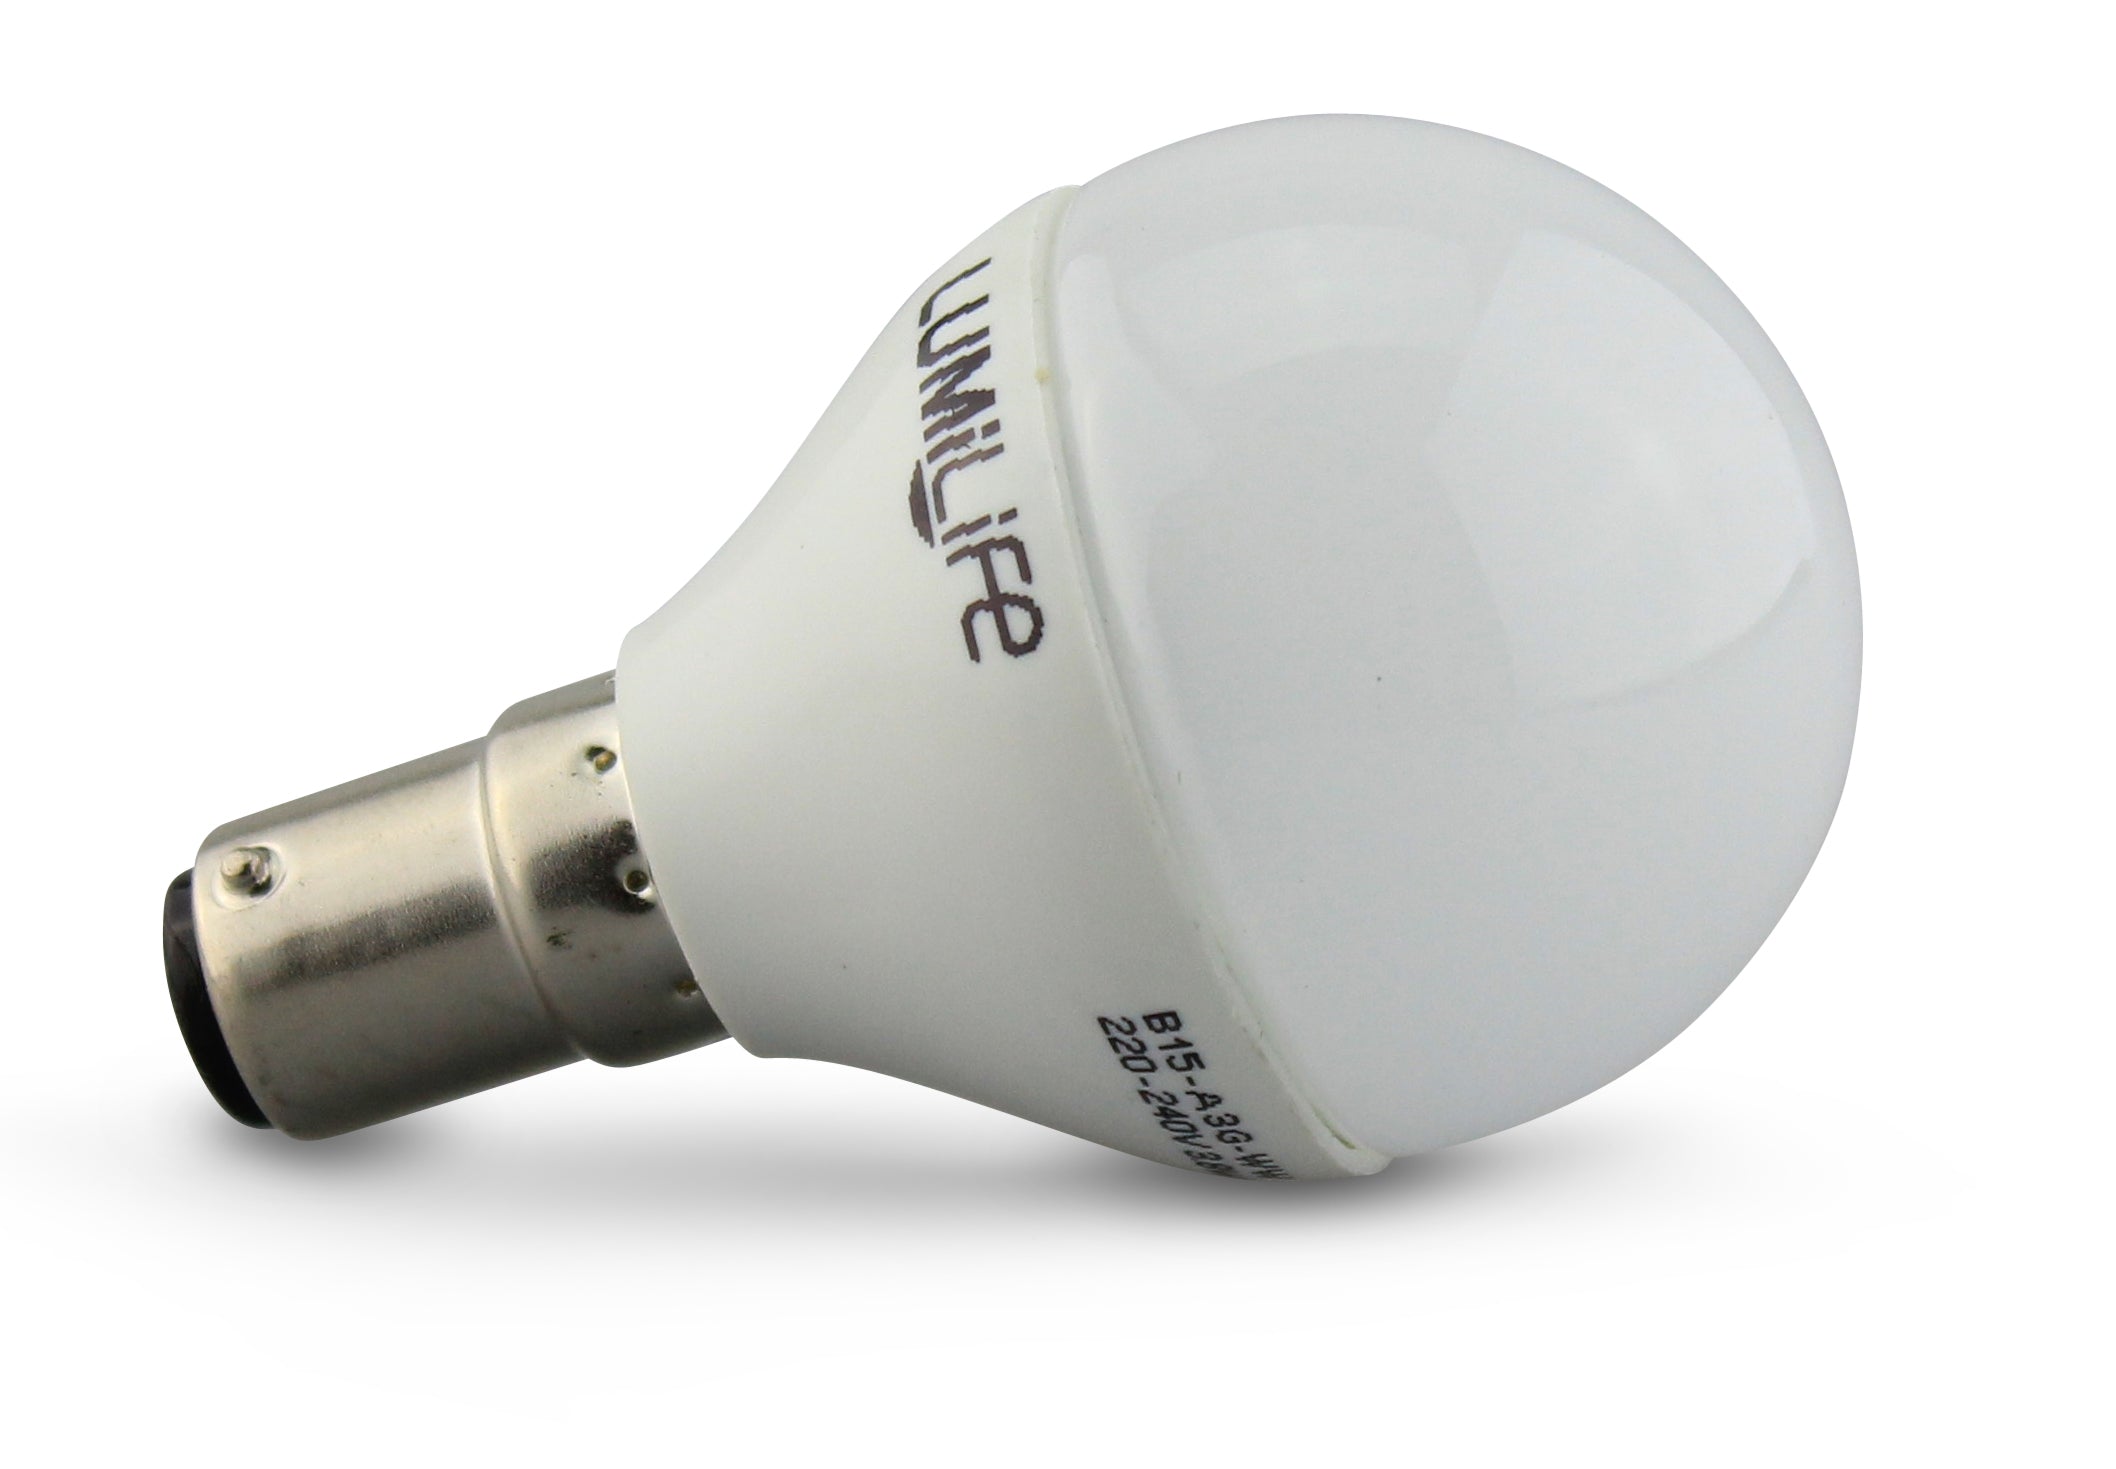 Your guide to E14 LED bulbs – LED Hut